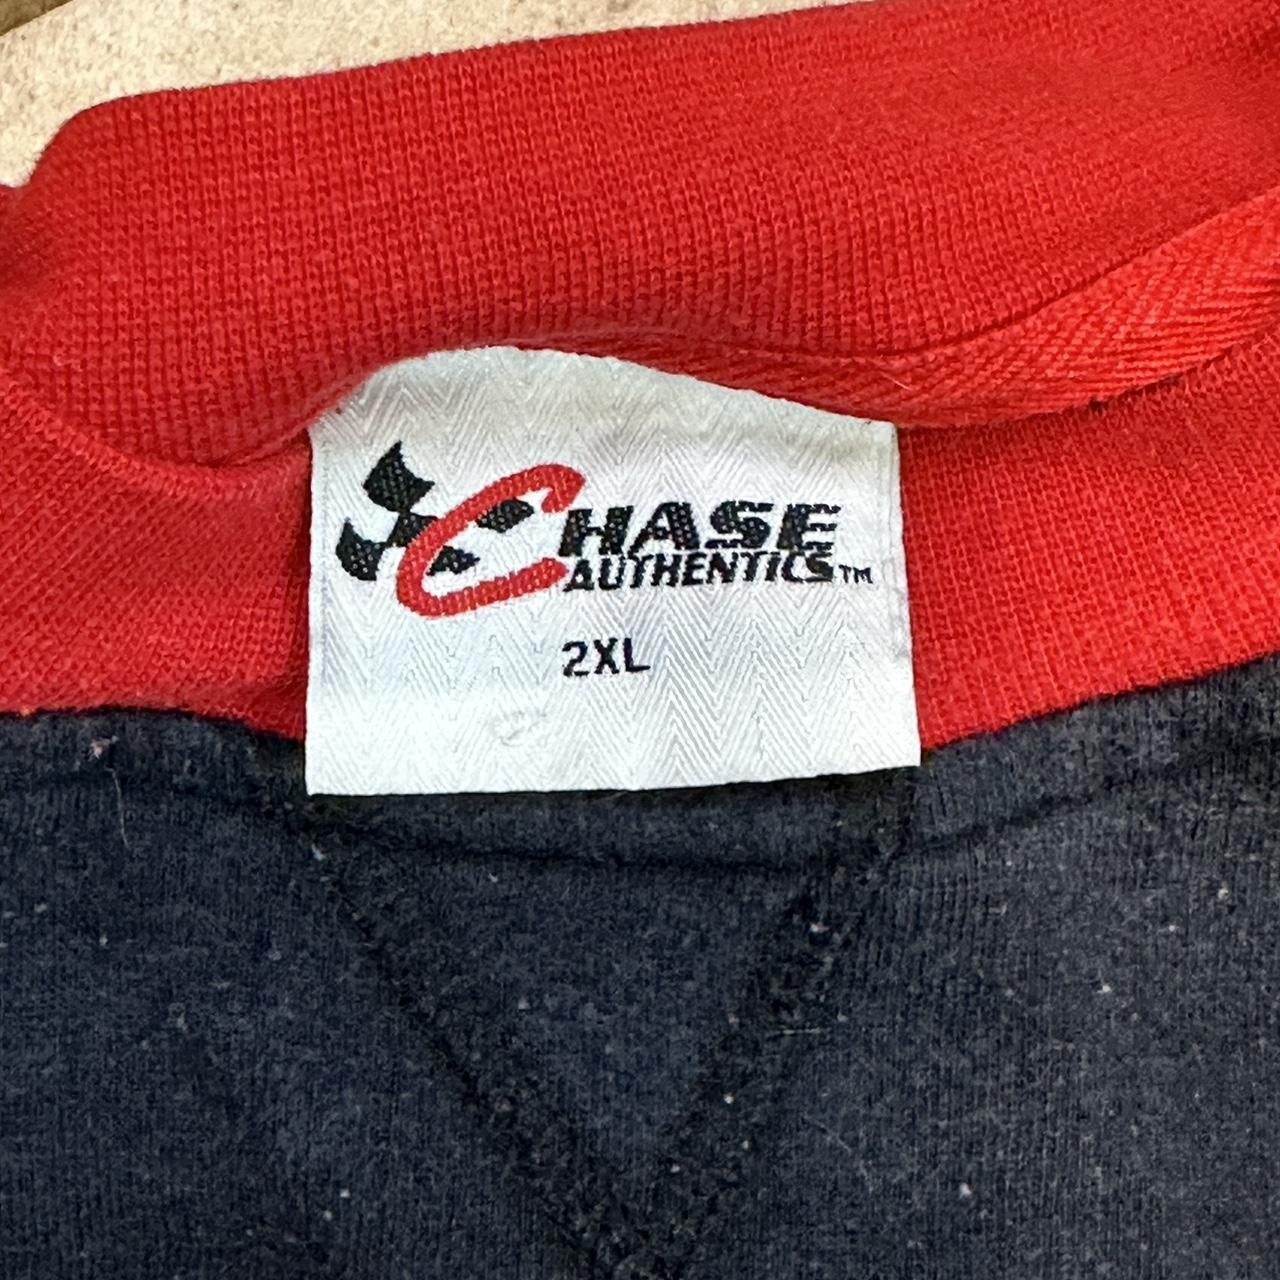 Chase Authentics Men's Red and Black Sweatshirt (5)